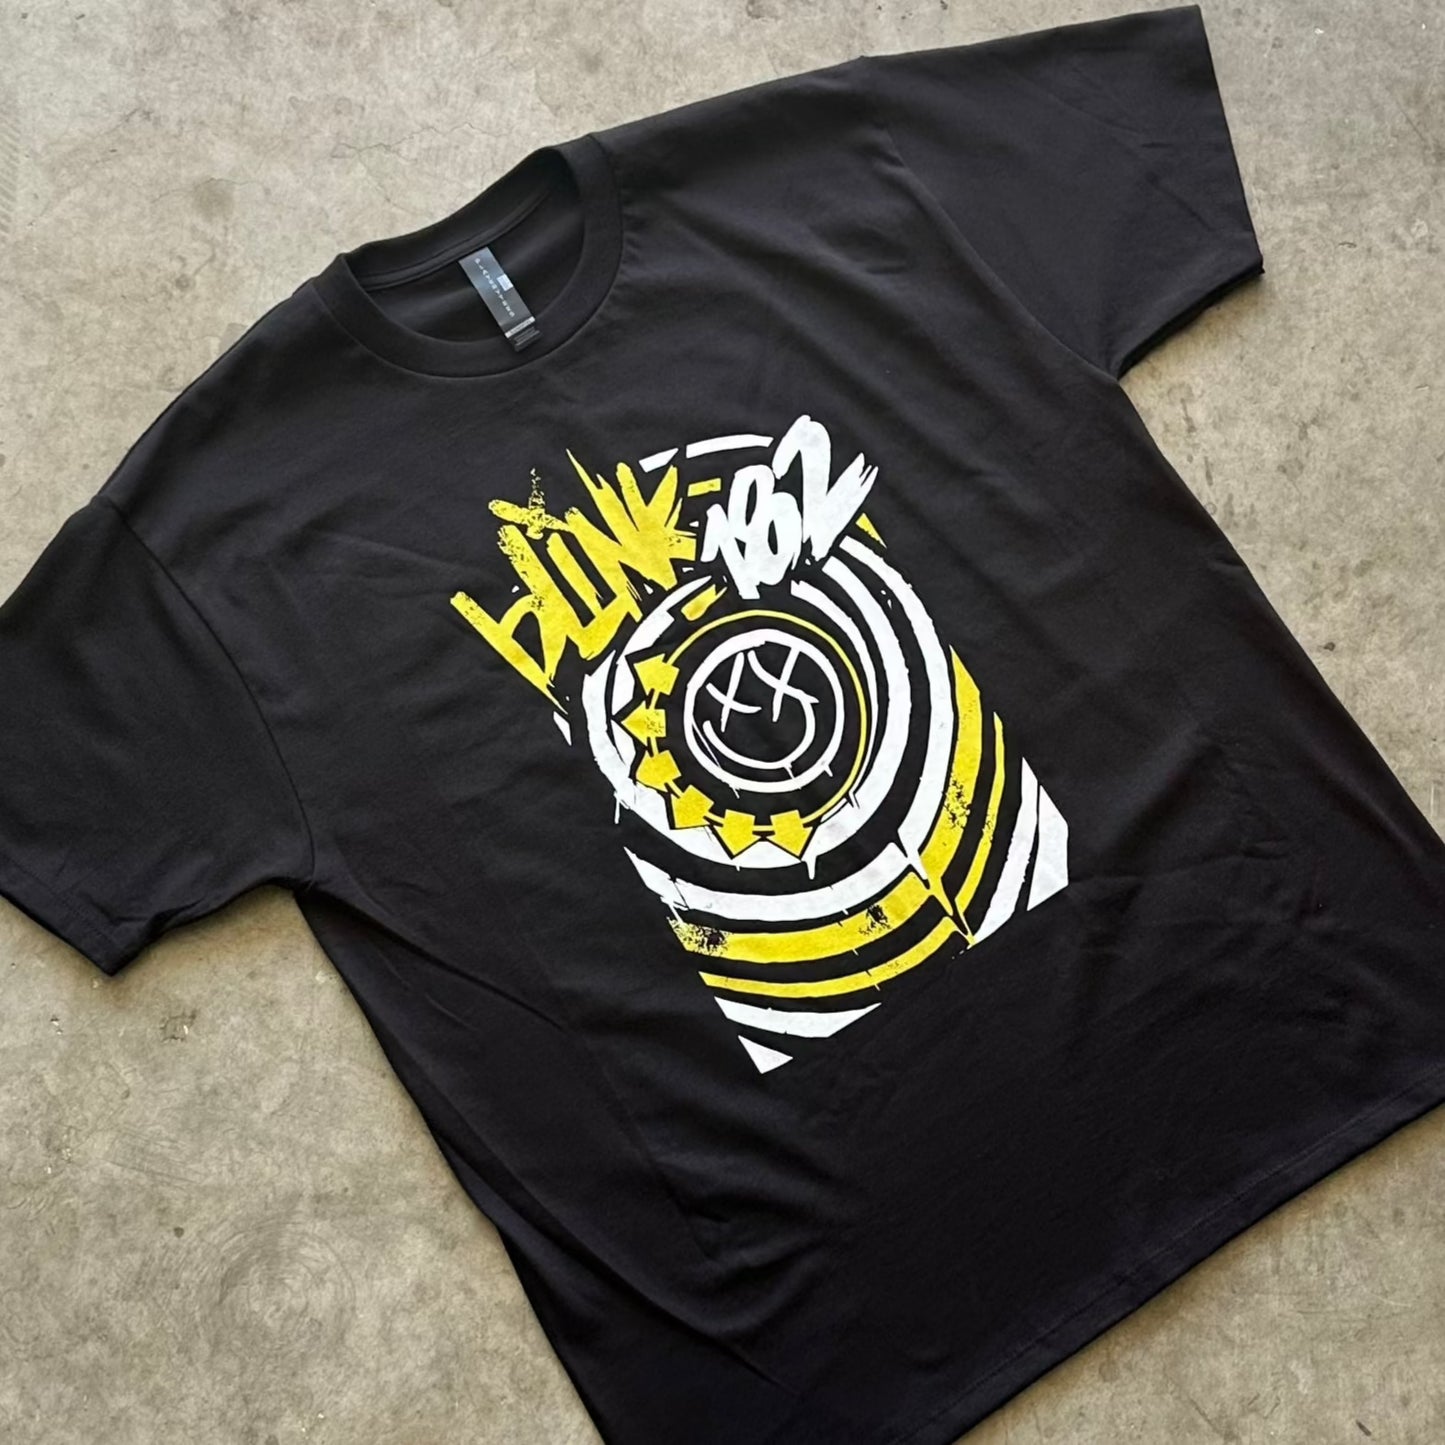 Blink 182 Band Tee (Yellow)